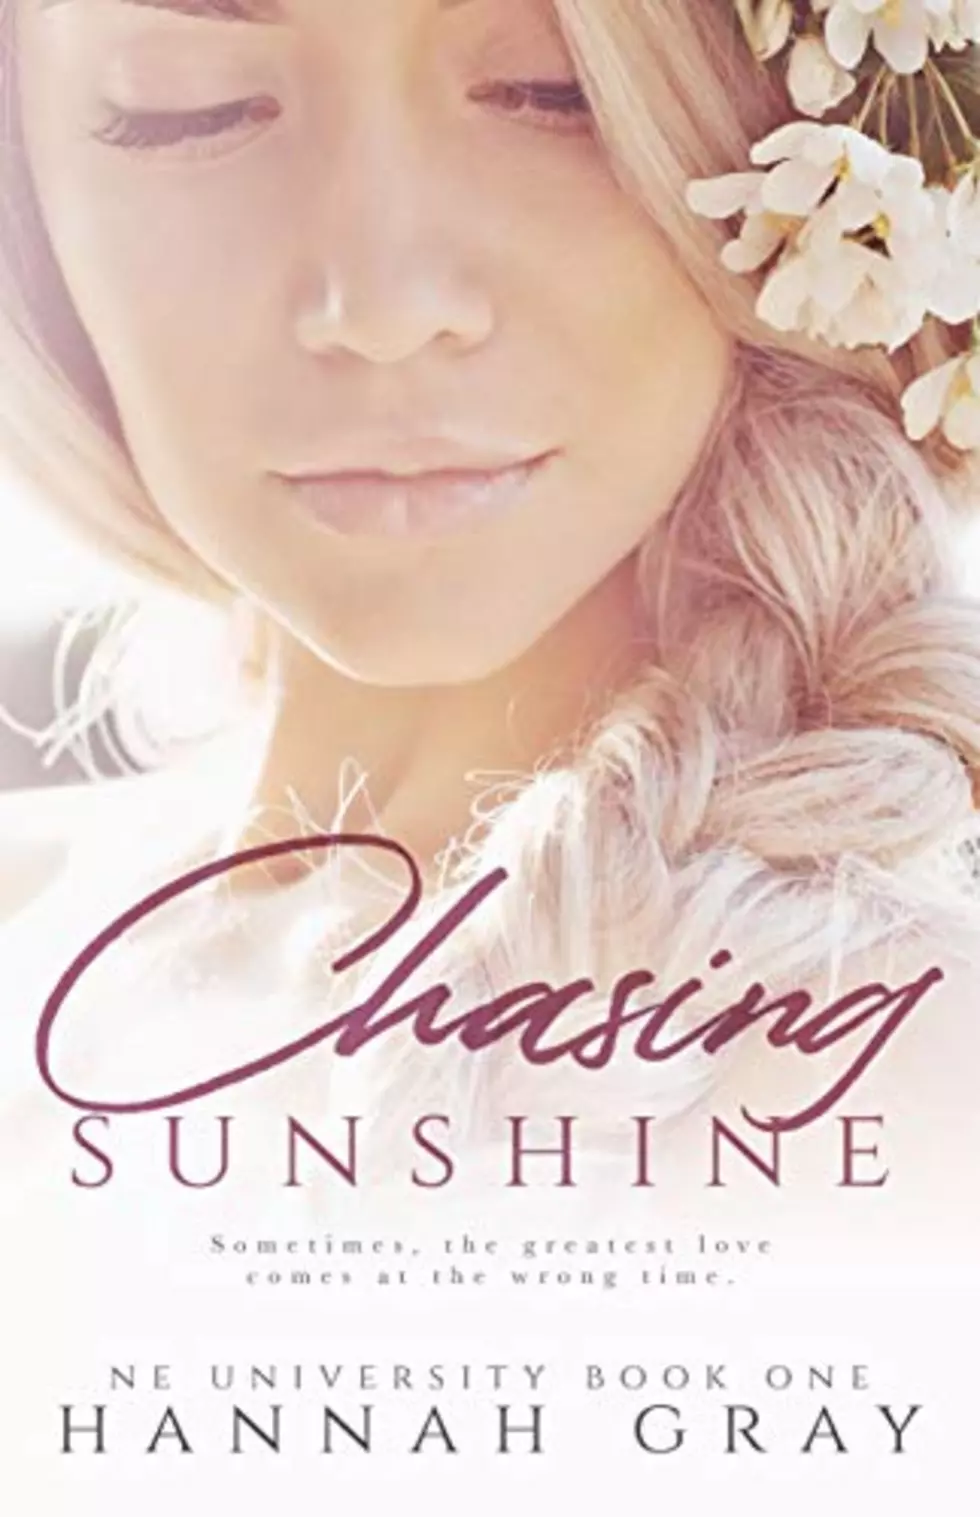 MDIHS Alumni (Mariah) Hannah Gray Publishes Her First Book Chasing Sunshine [VIDEO]